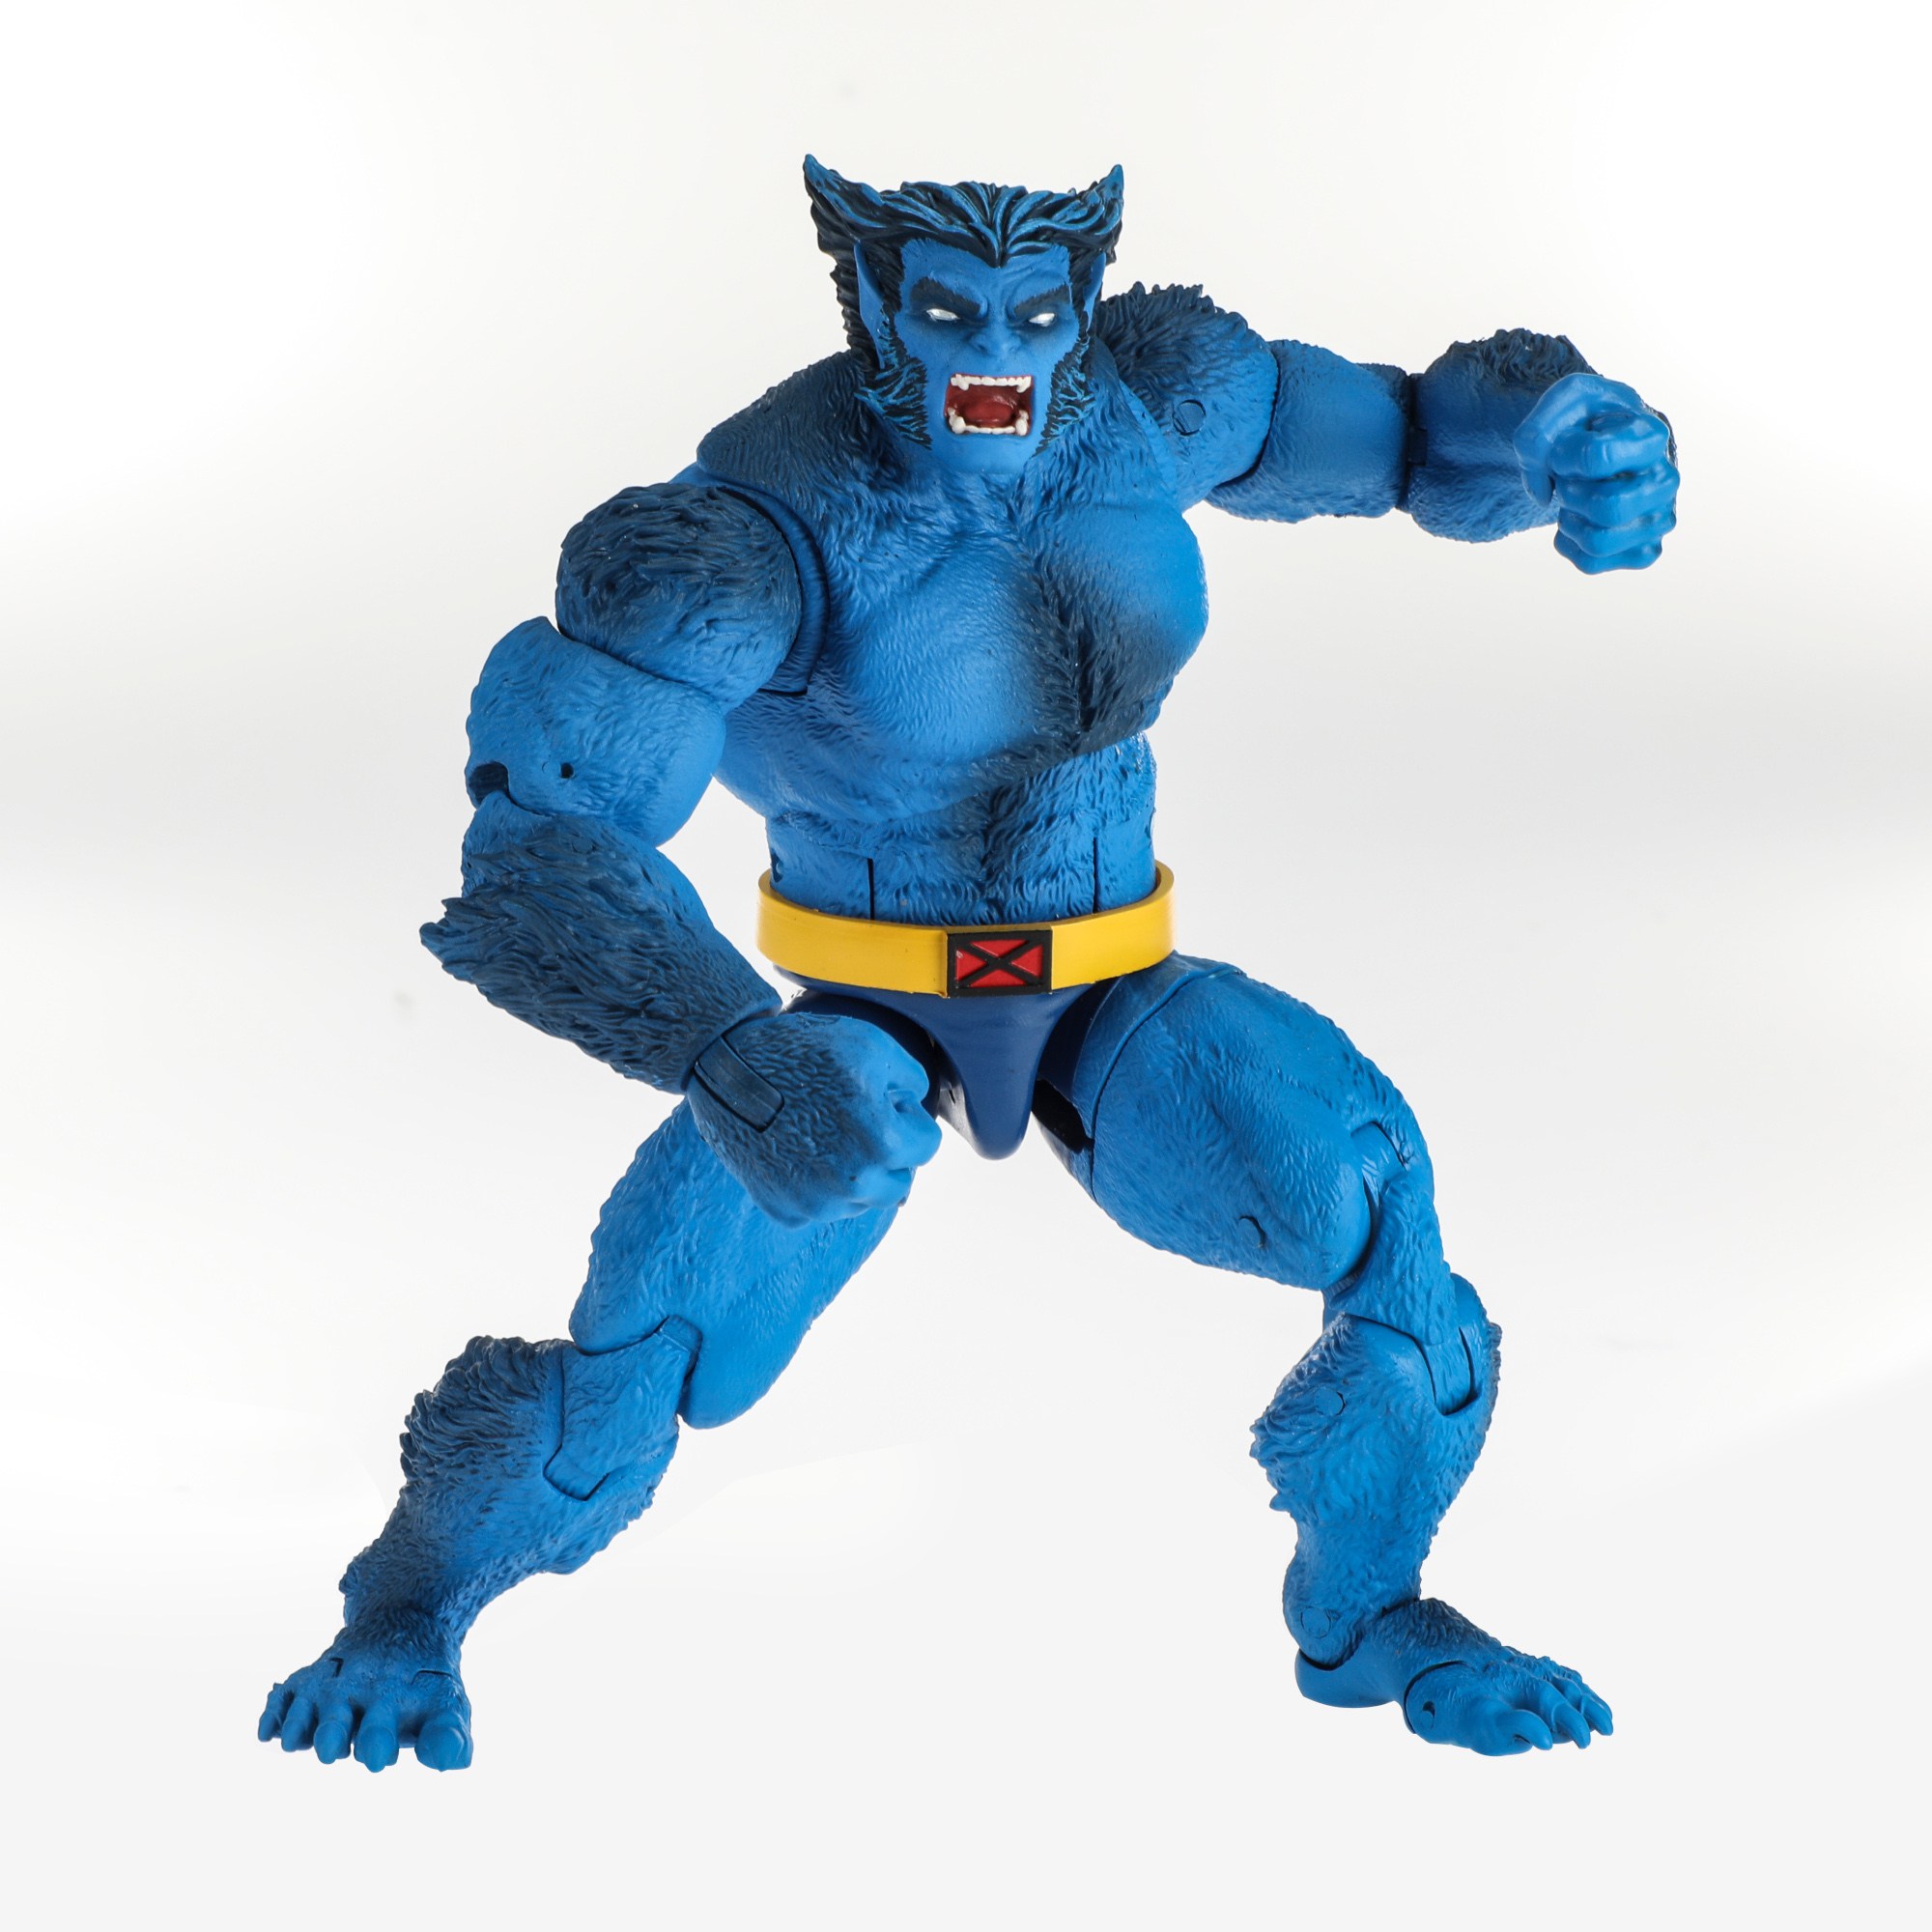 Marvel-Legends-Series-6-inch-Beast-Figure-X-Men-wave.jpg